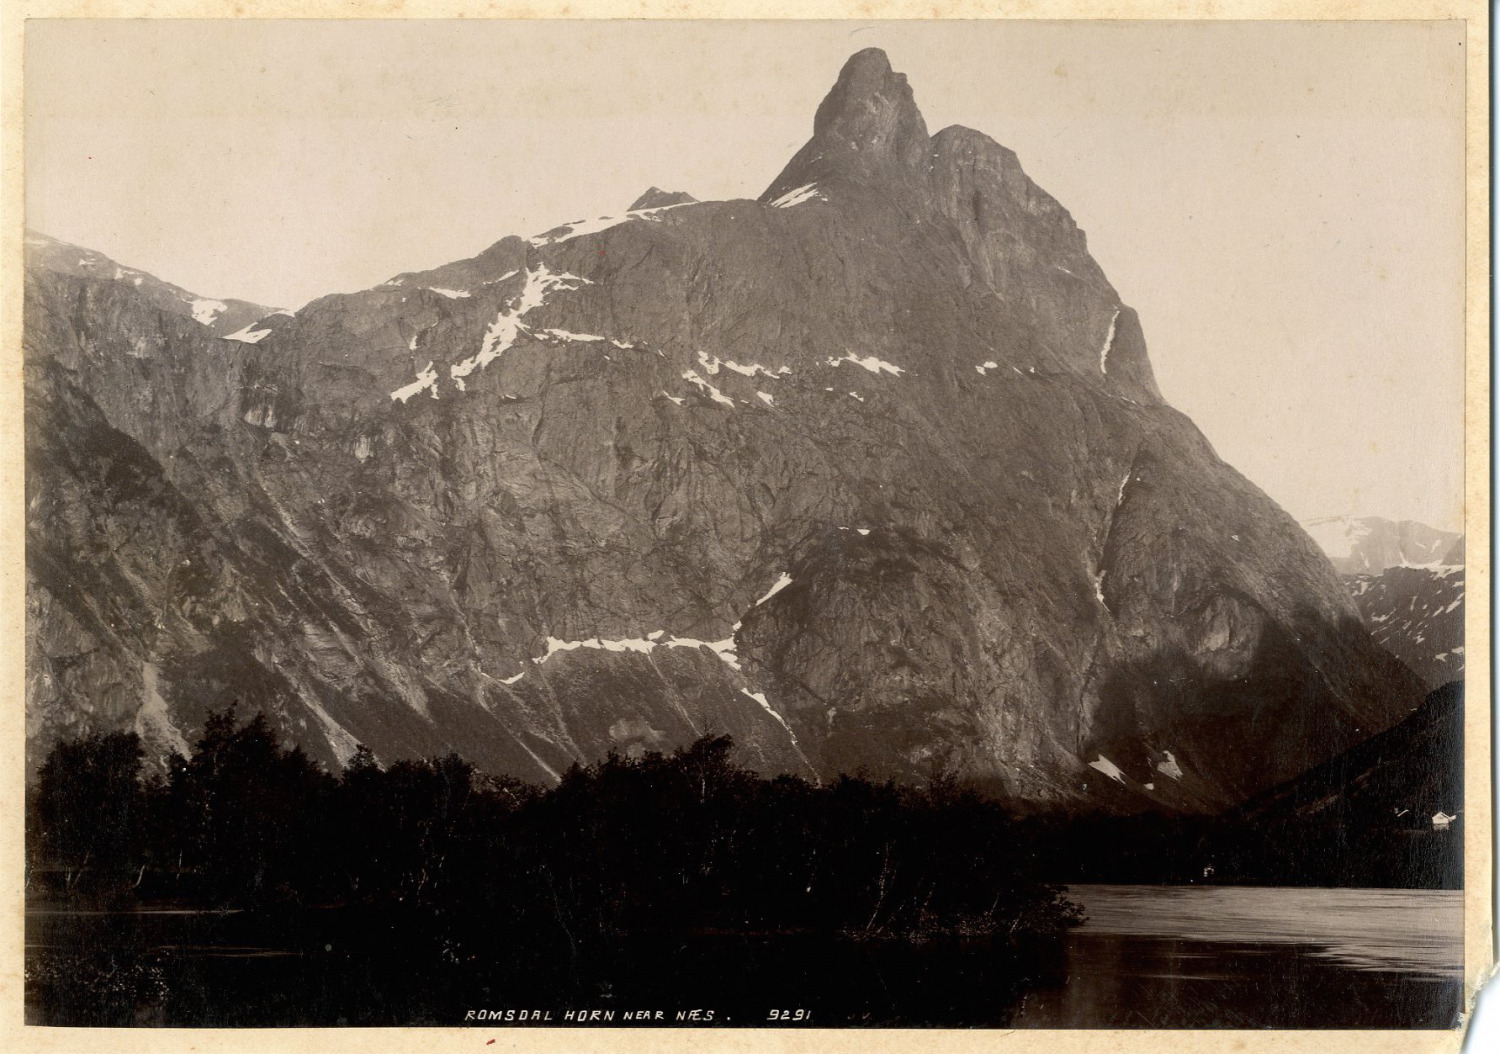 Norway, Romsdal Horn near Naes Vintage Albumen Print.  15x Albumin Print